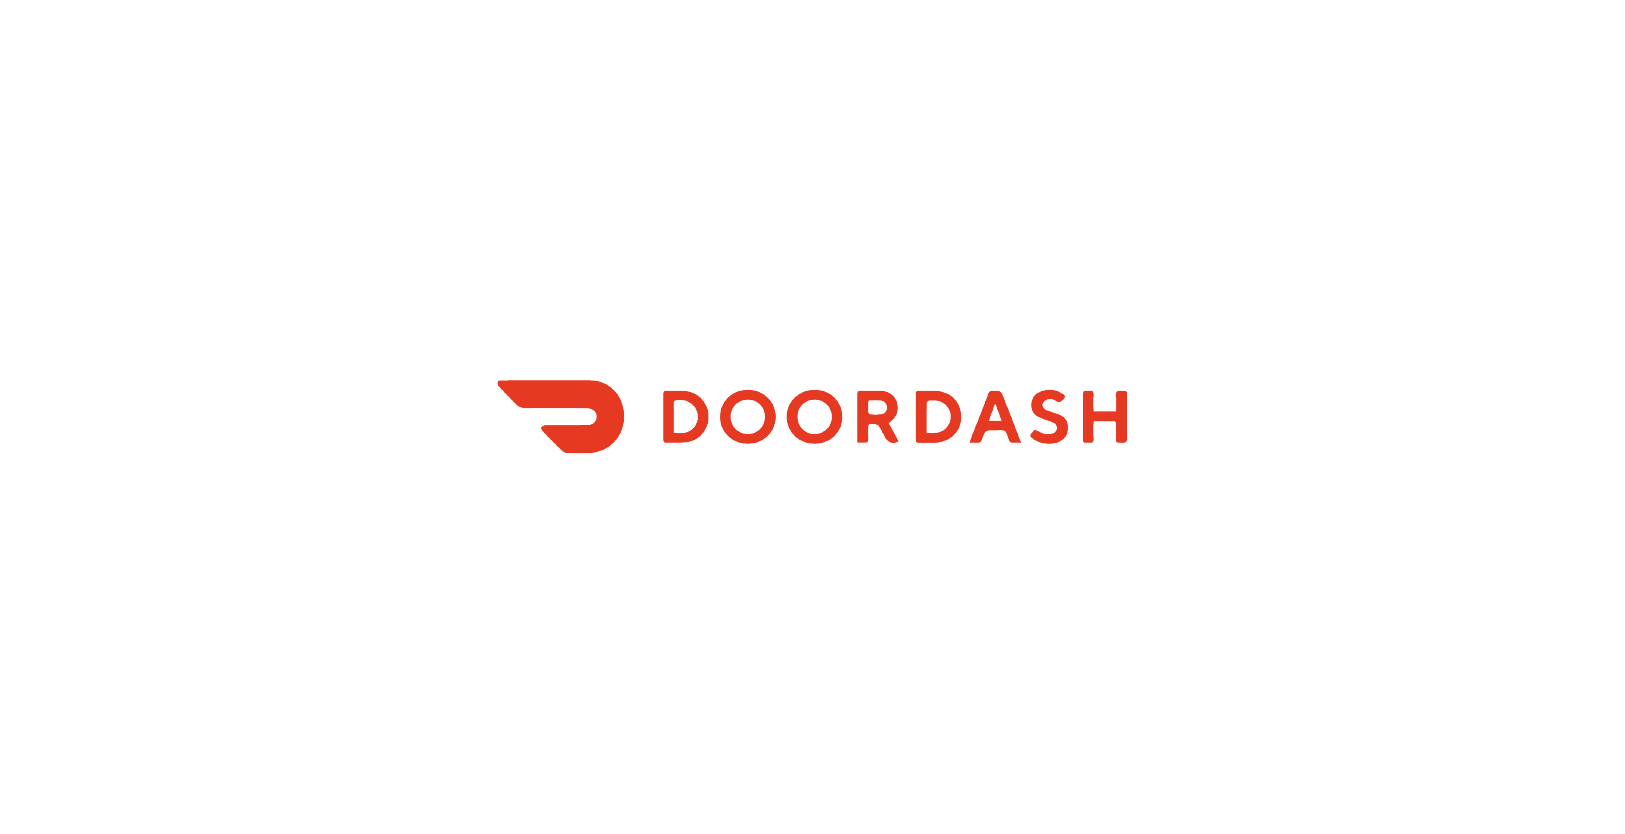 Vision Fund investment portfolio company DoorDash's logo